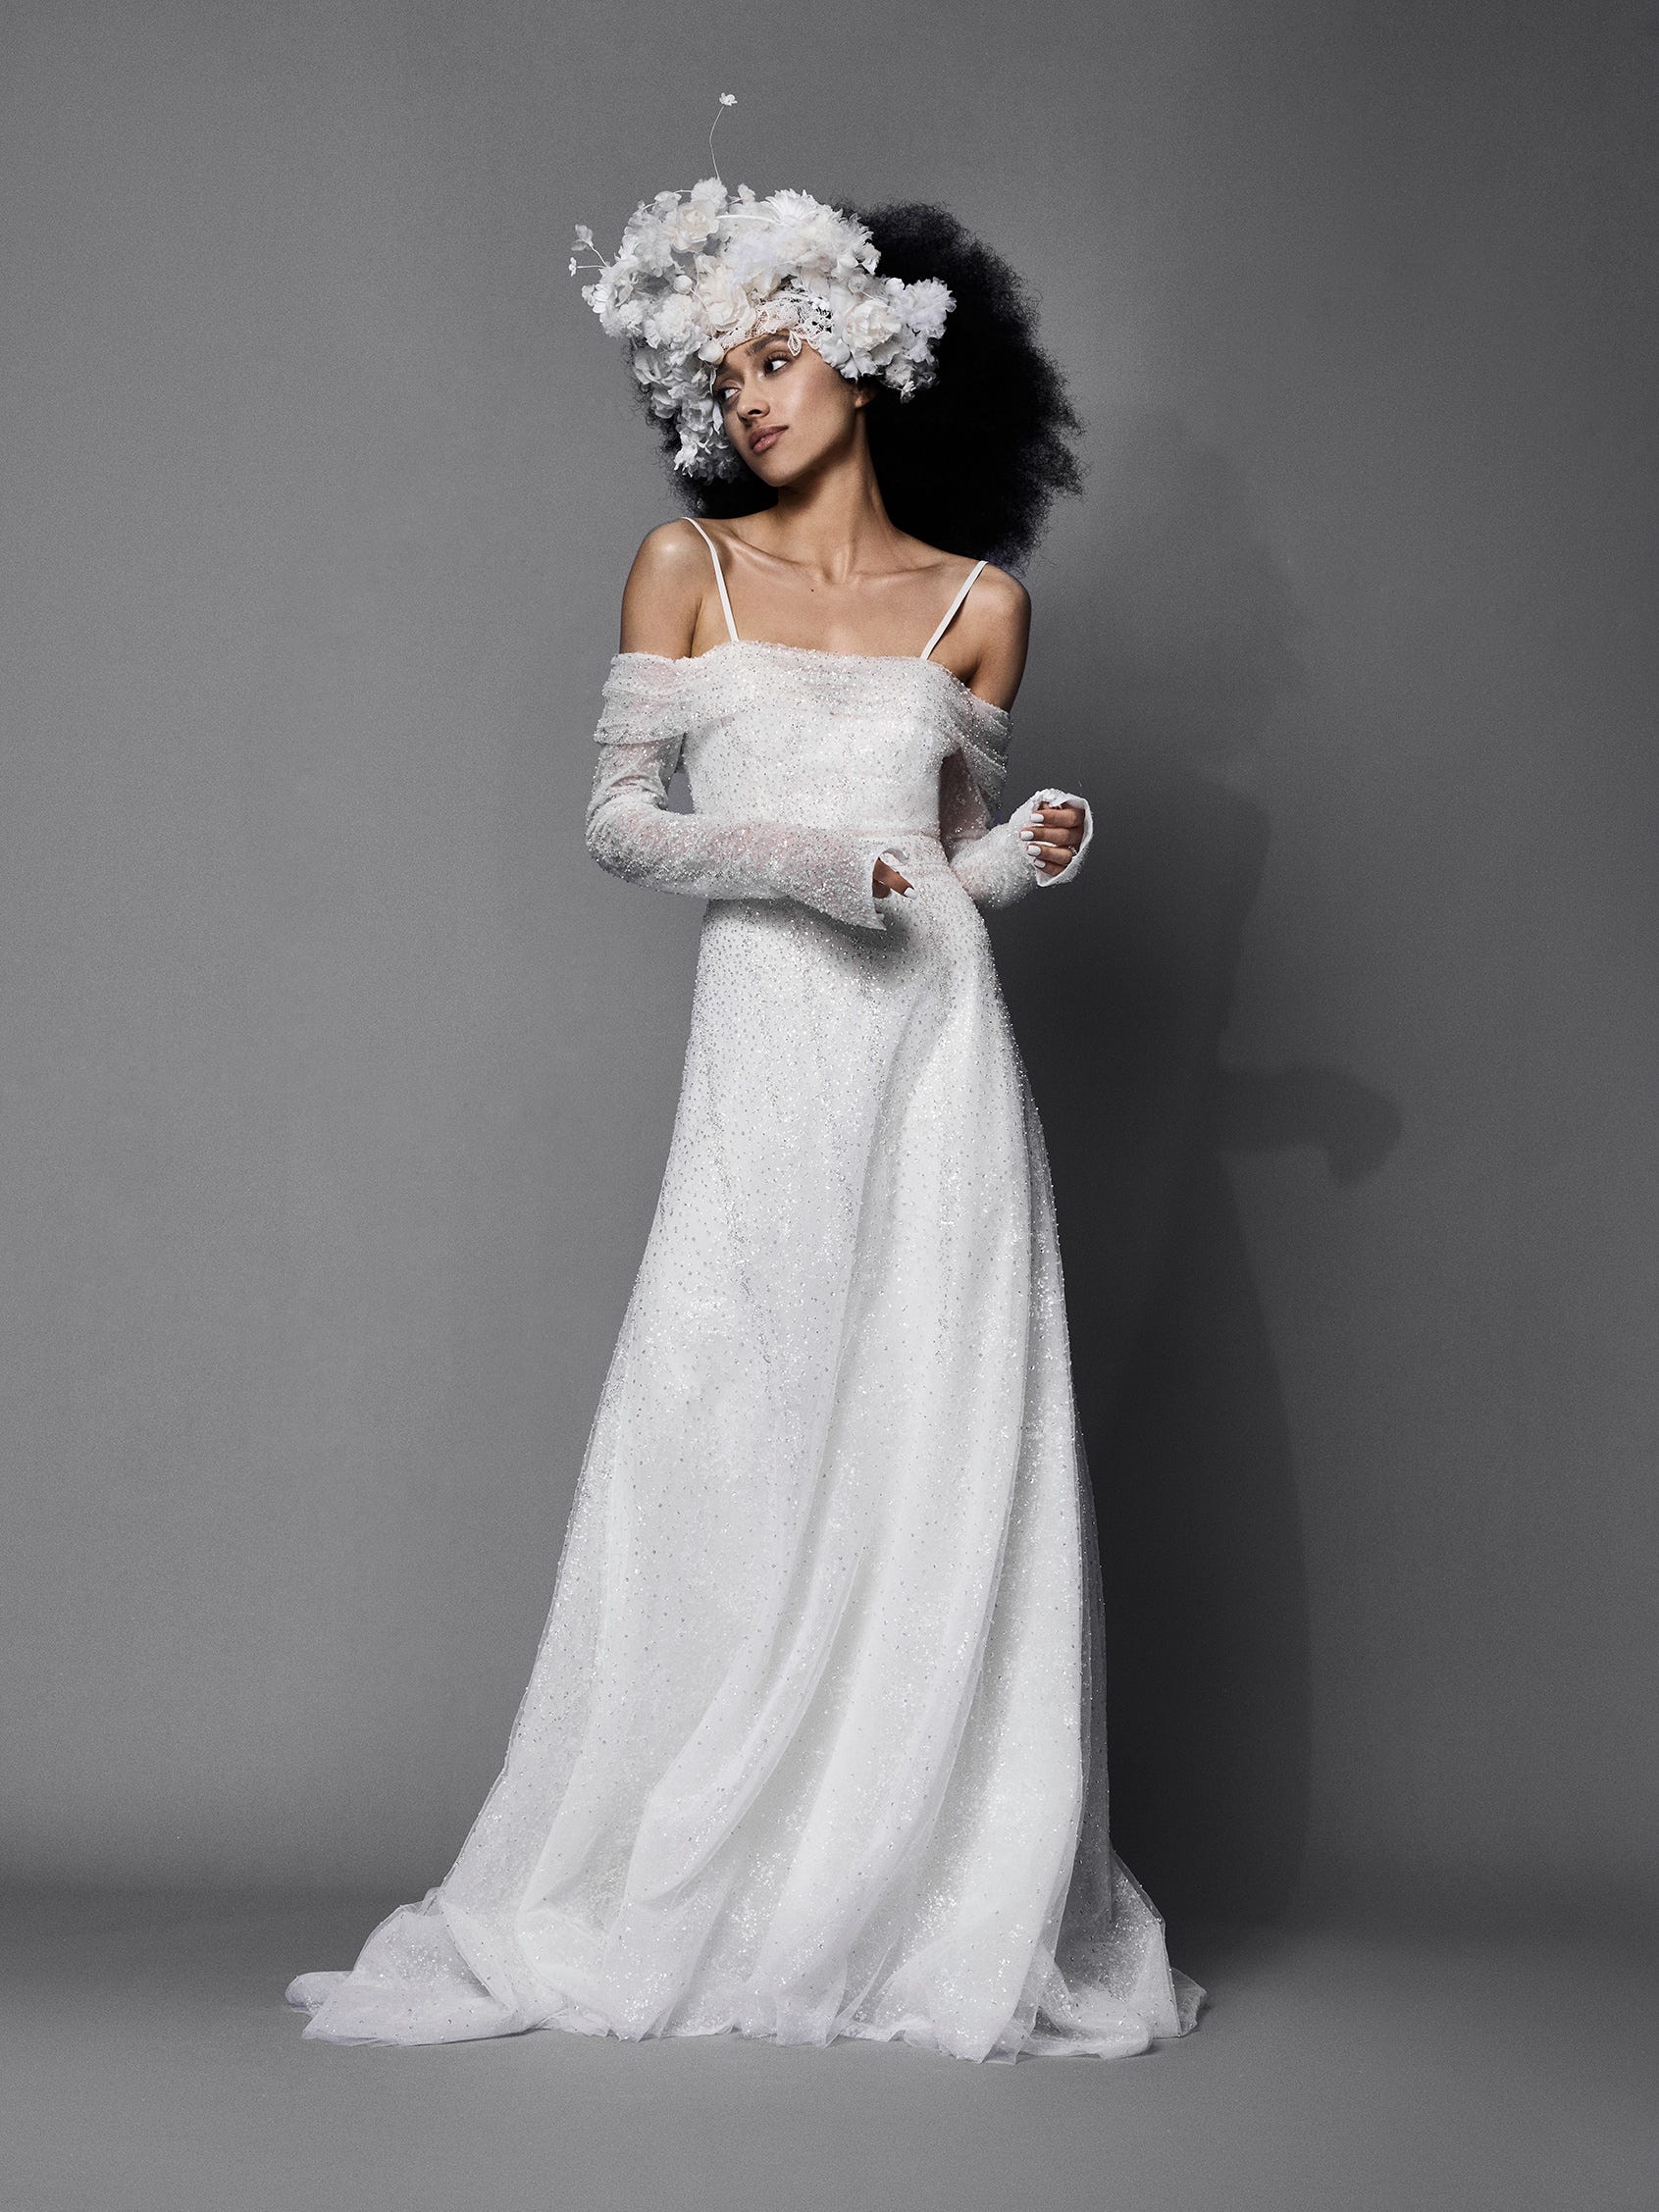 14 Classy and Ultra-Feminine Wedding Gowns For Modern Brides - Praise  Wedding